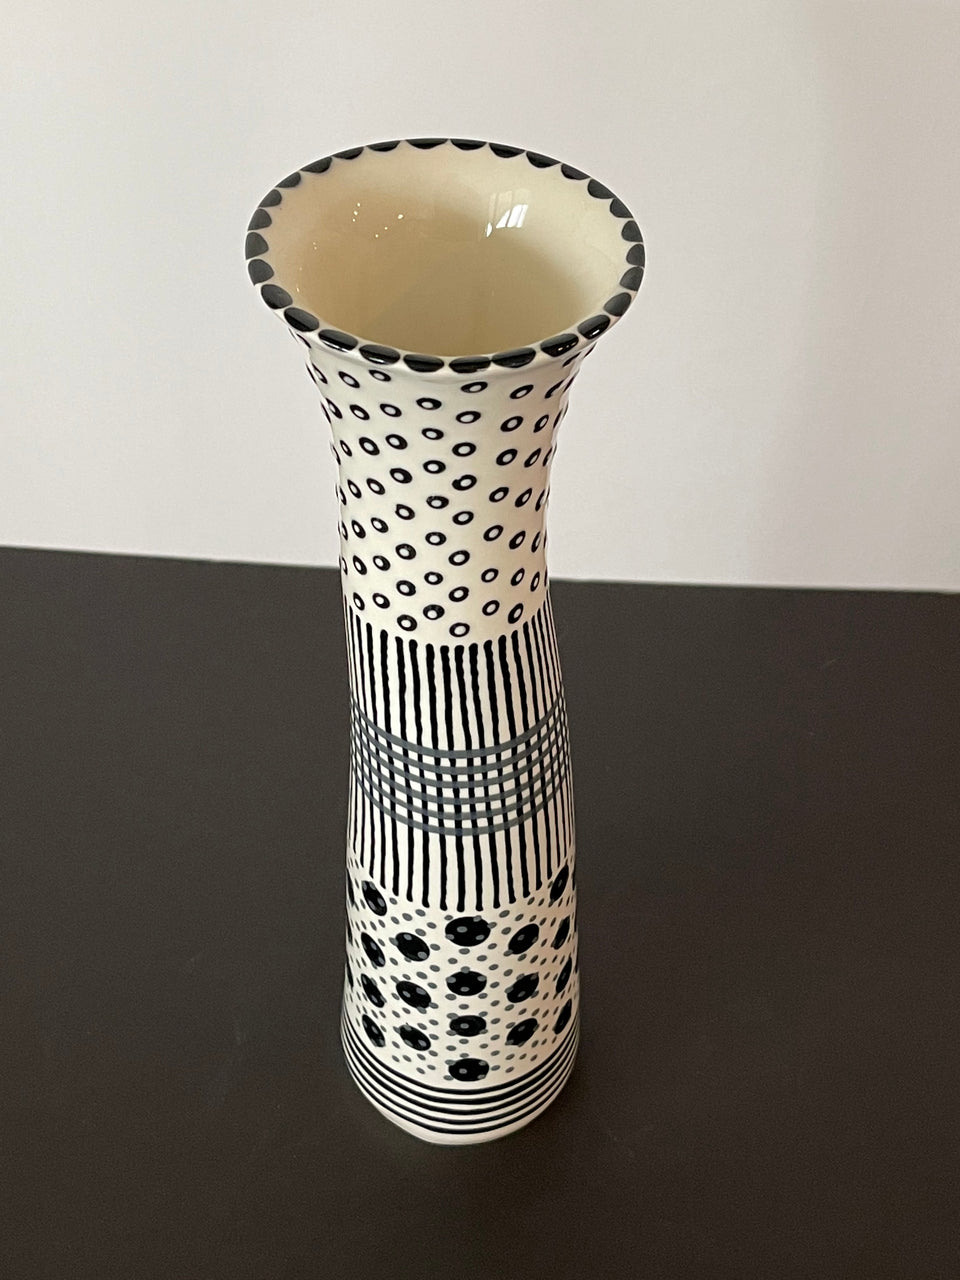 Potters Tall Twisty Vase